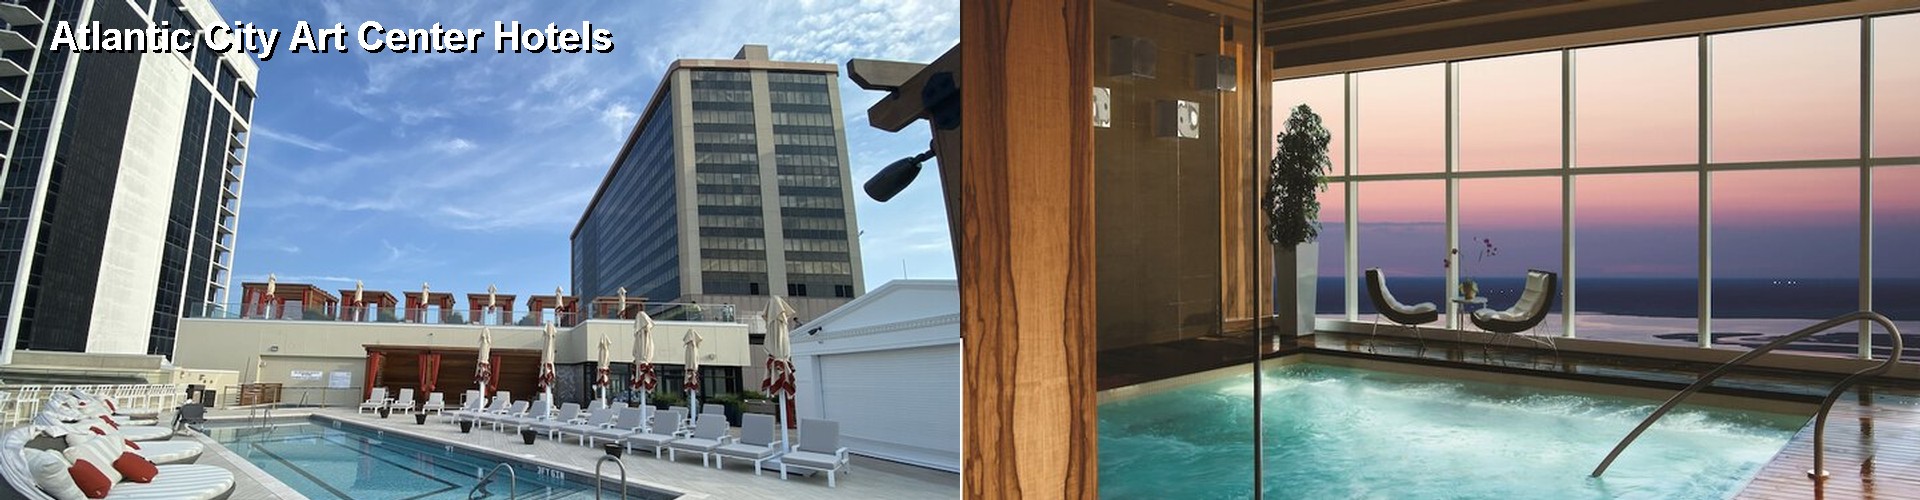 5 Best Hotels near Atlantic City Art Center